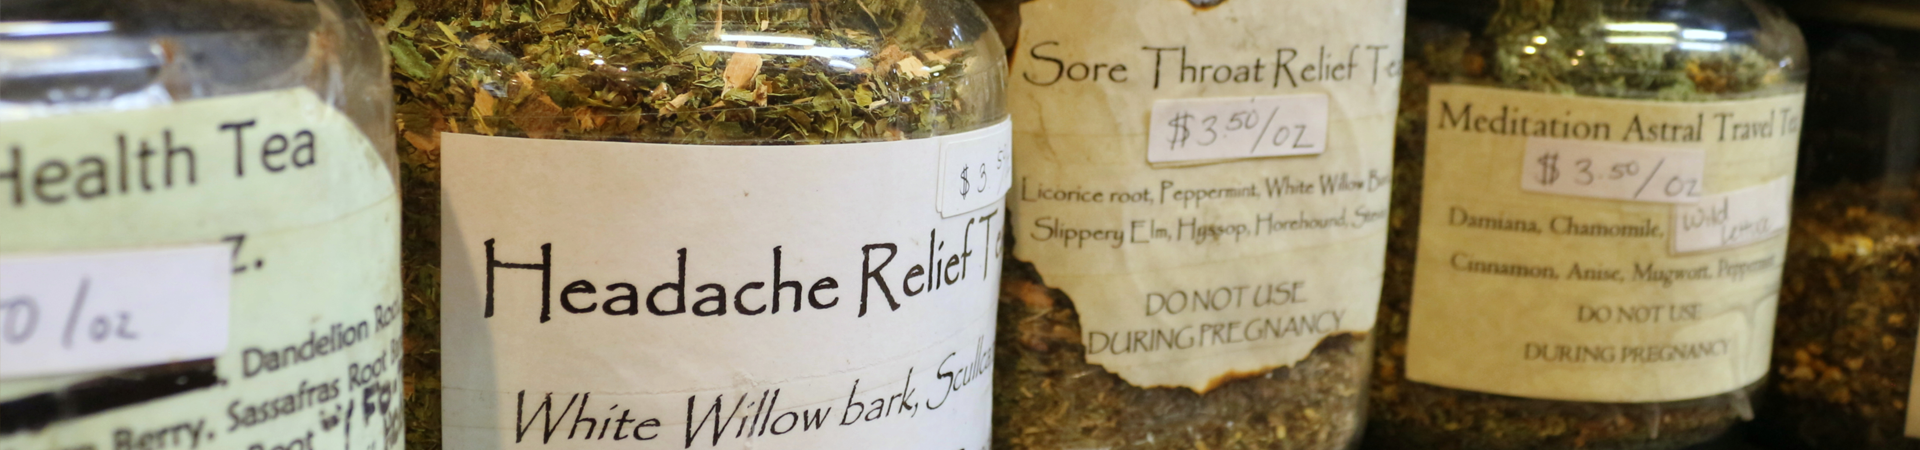 Herbal Tea Shelf with teas for headache and sore throat relief